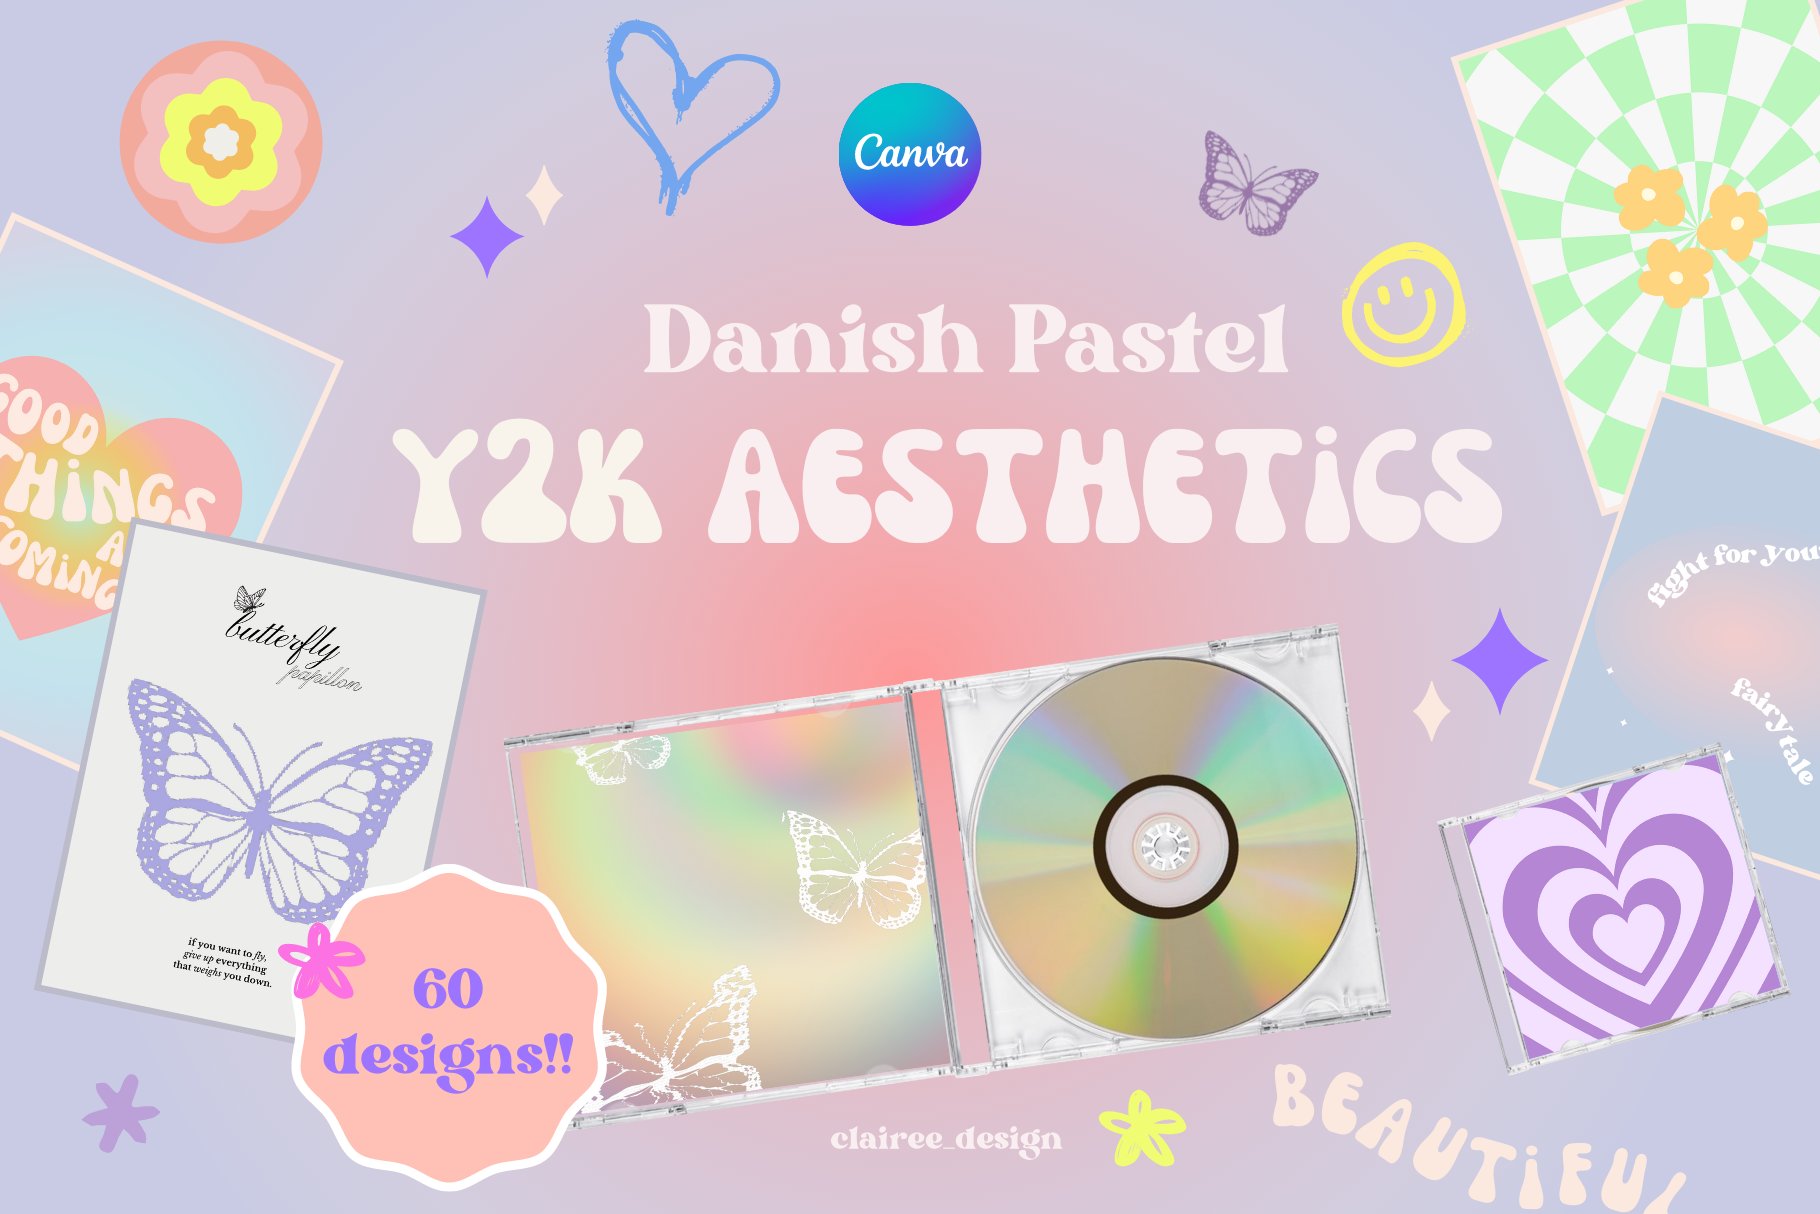 Danish Pastel Y2K Aesthetics Posters